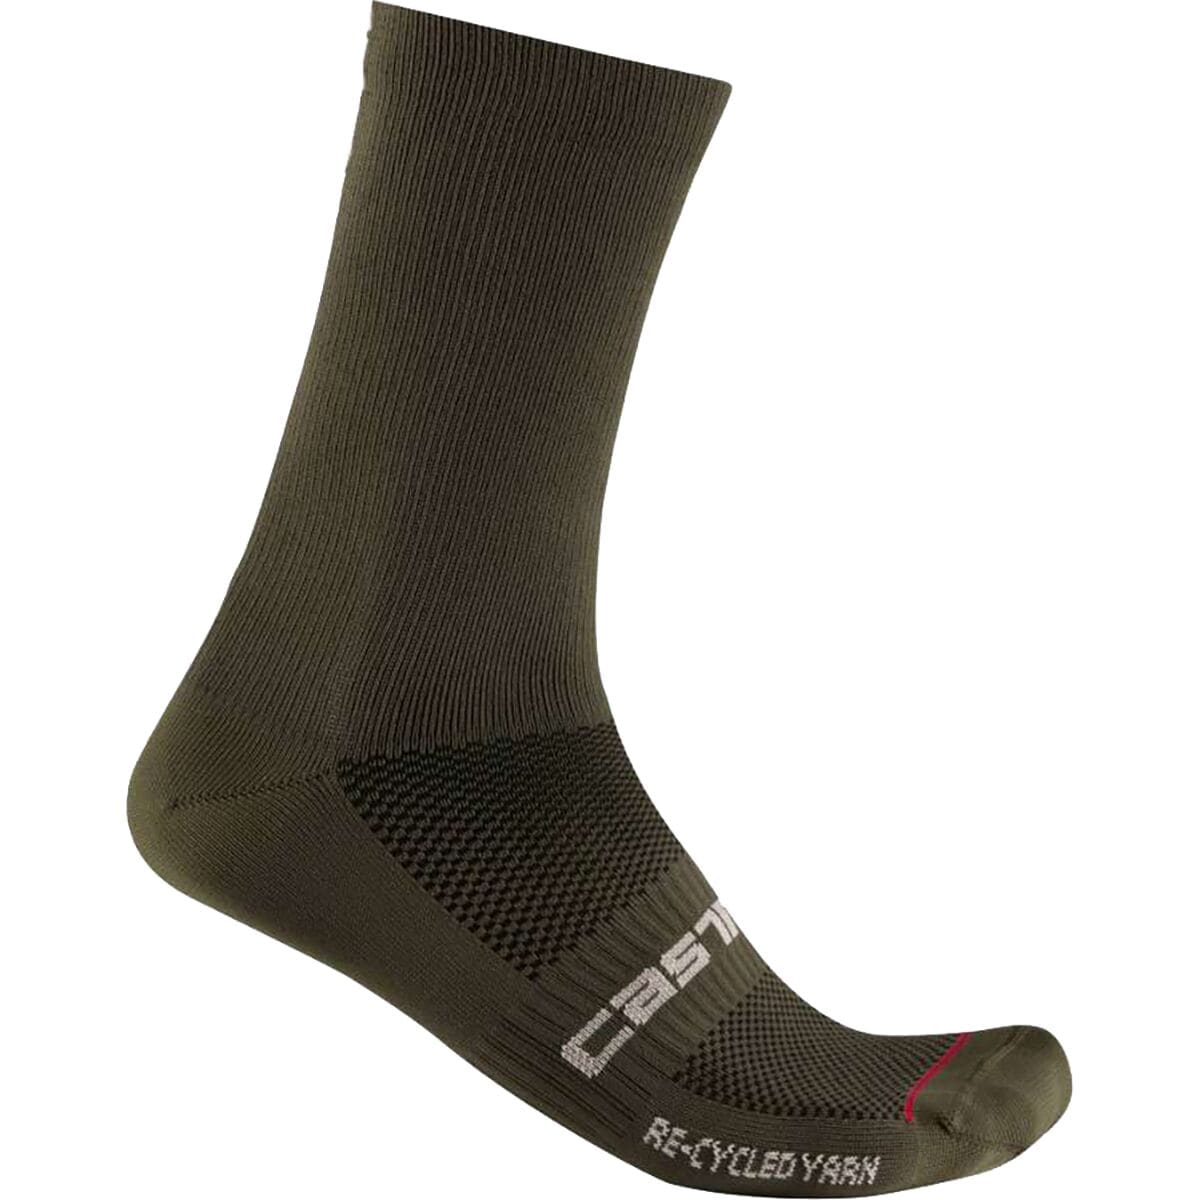 Castelli Re-Cycle Thermal 18 Sock - Men's